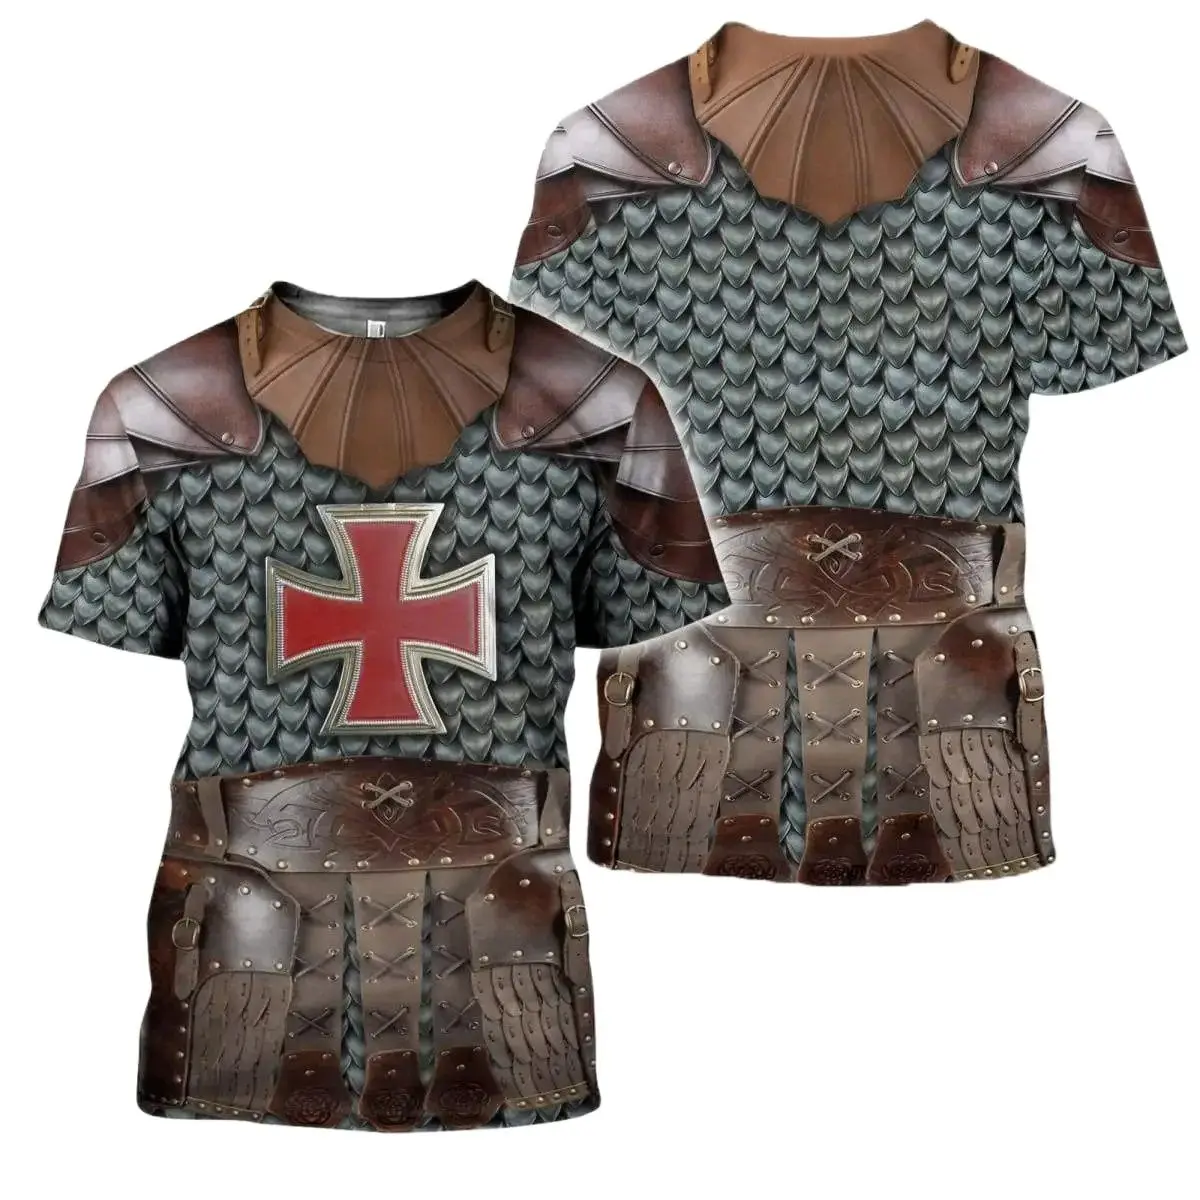 European Medieval Knight Style Summer Print Fashion New Men's Street Culture Casual Slim Retro 0 Collar Short Sleeve T-shirt Top